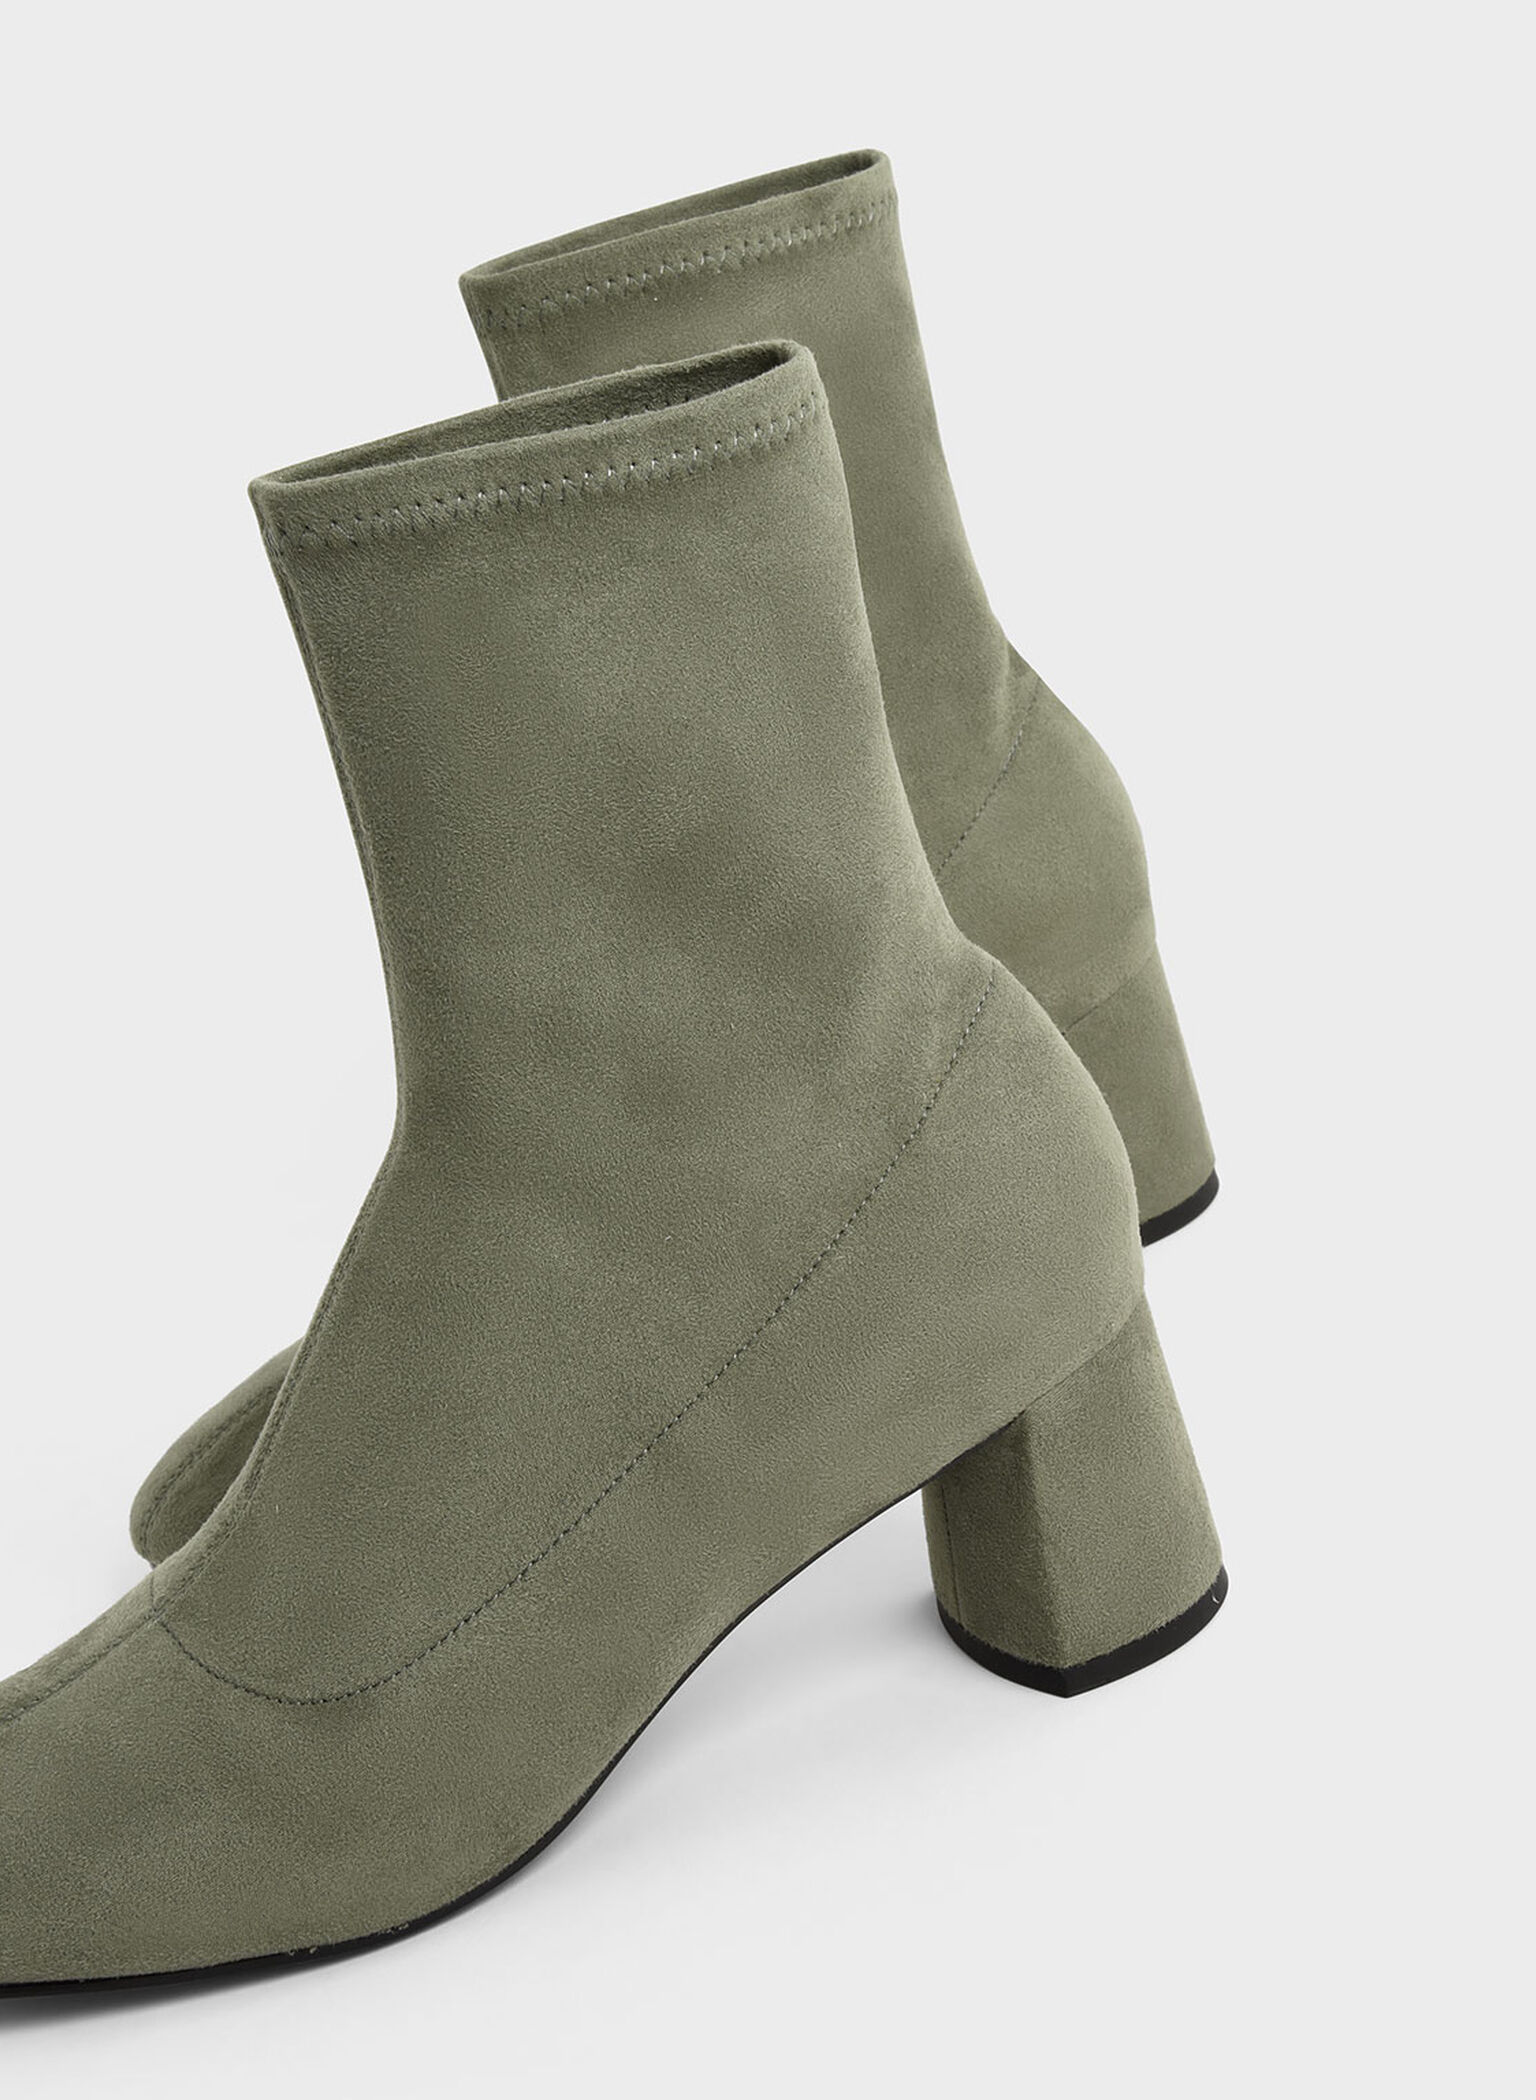 Textured Stitch-Trim Ankle Boots, Sage Green, hi-res